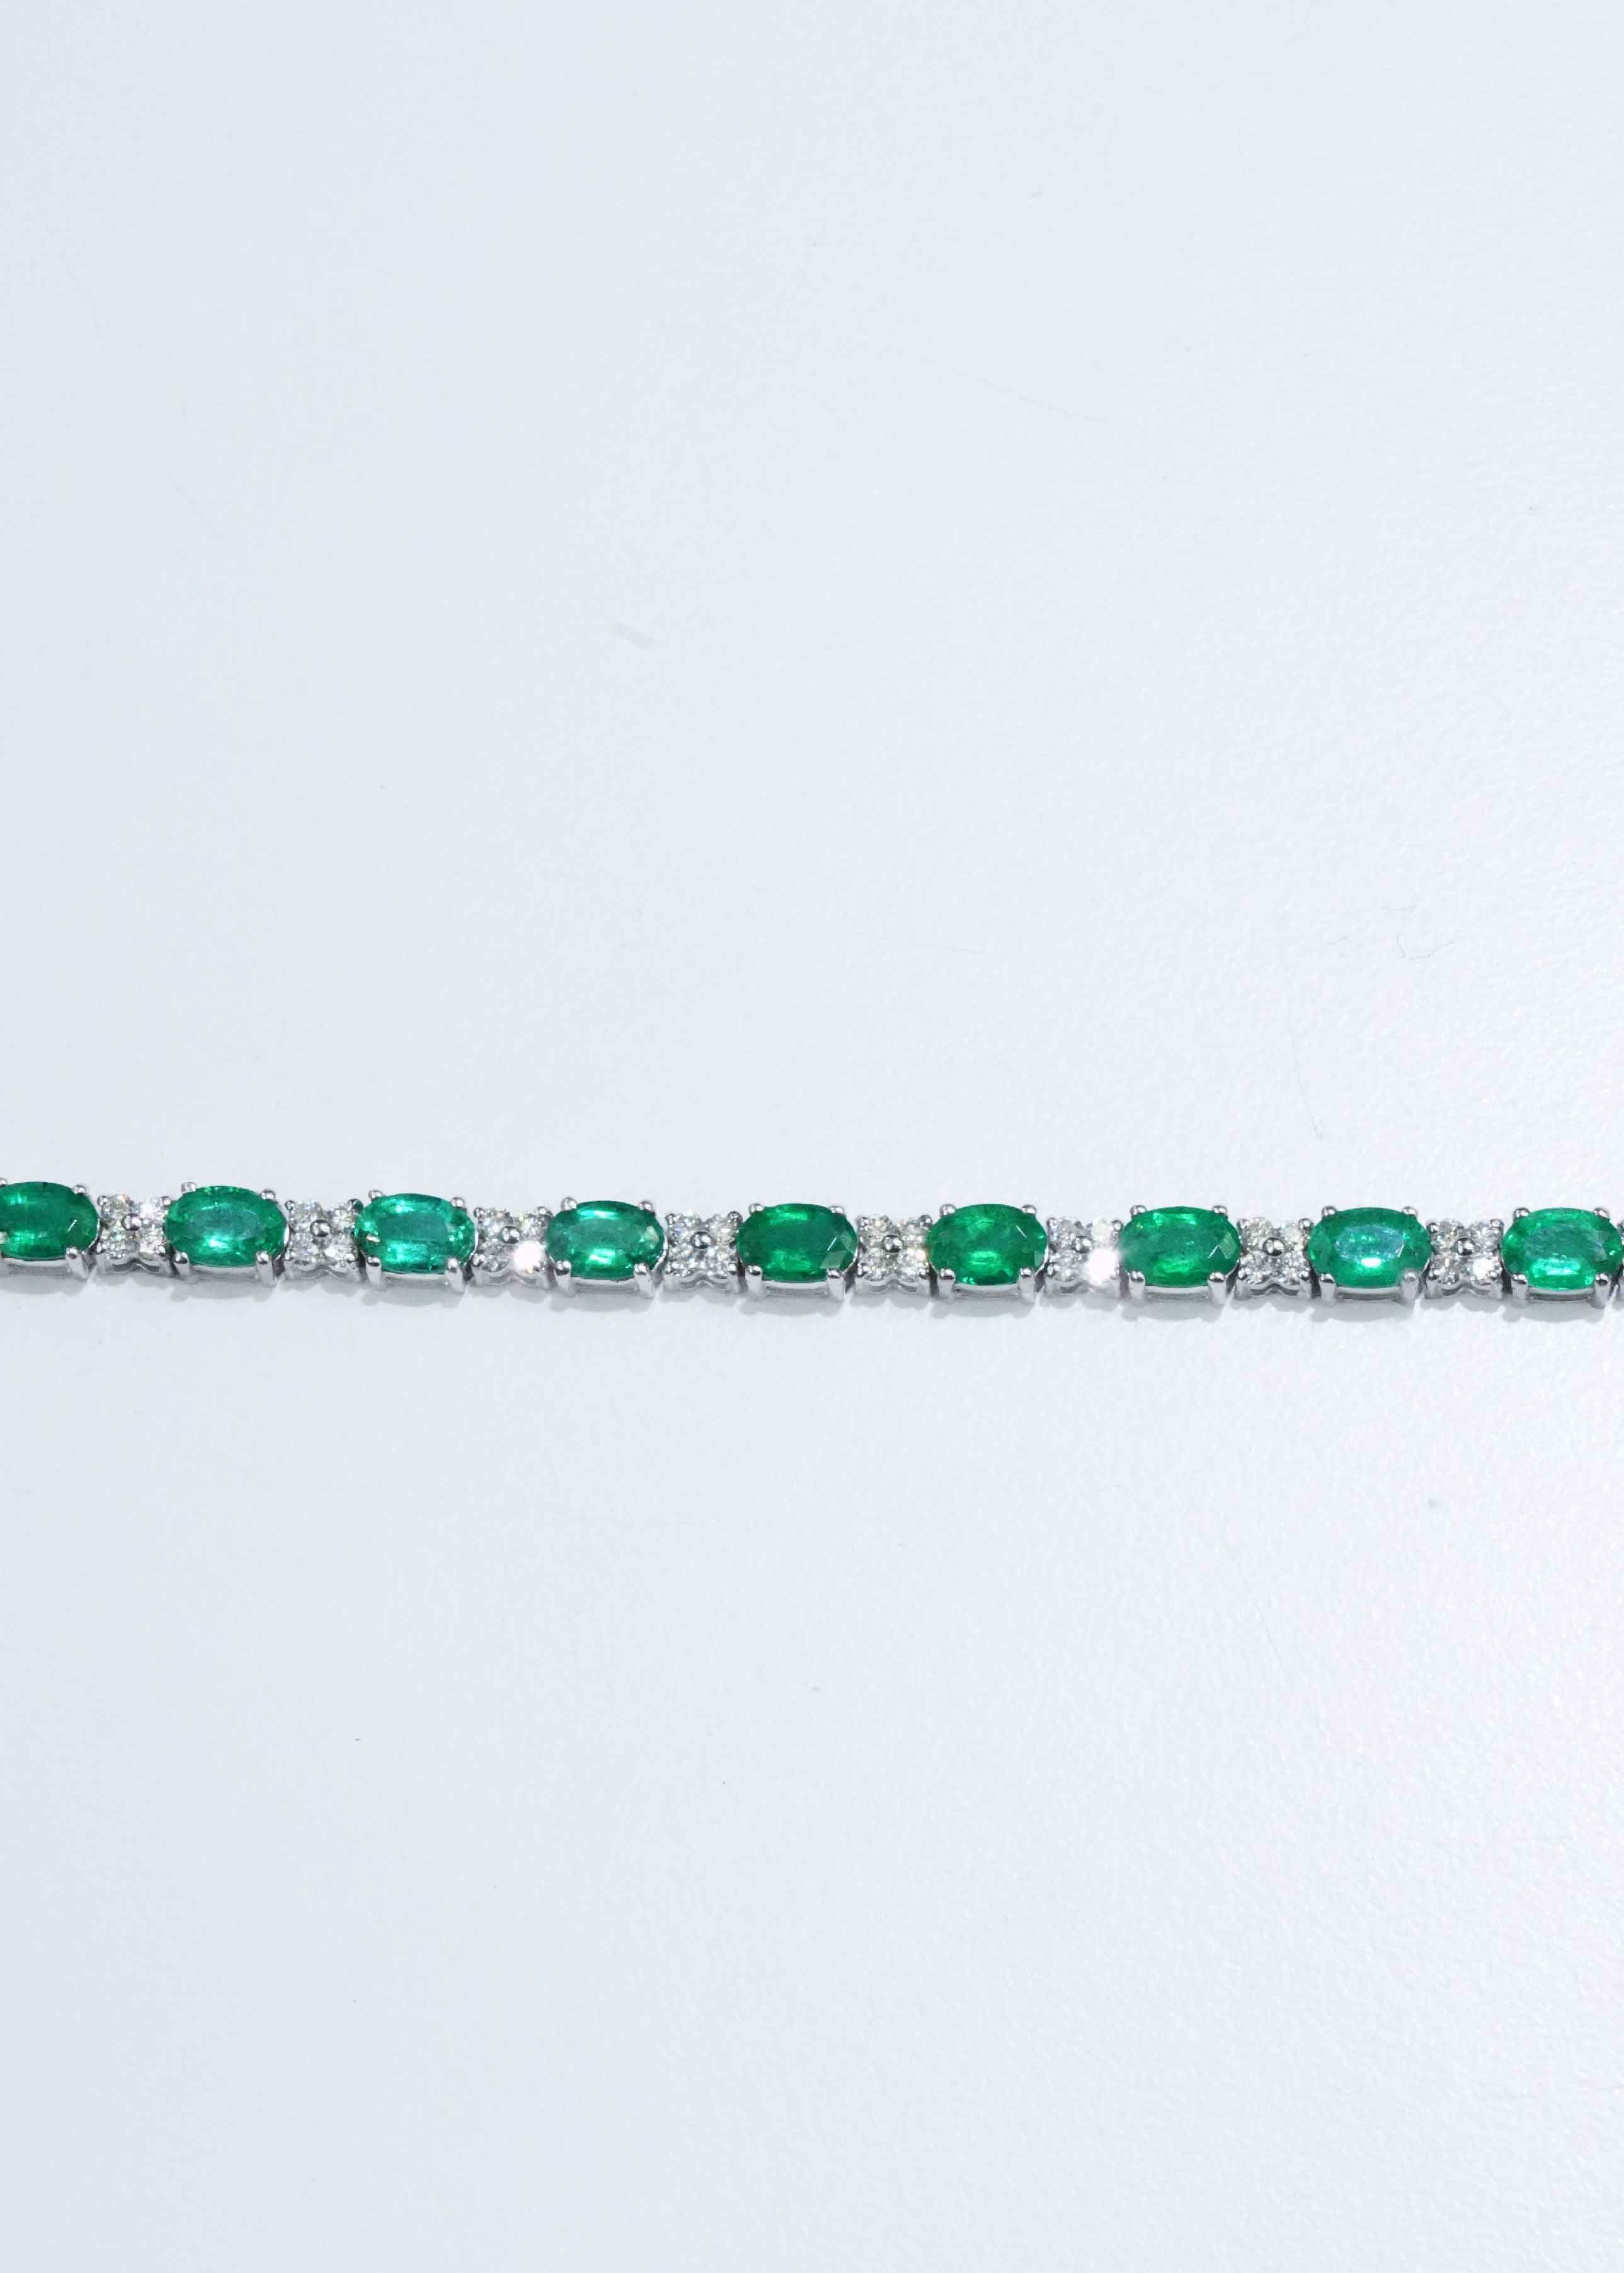 Emerald Bracelet 1.63 carat diamonds 8.45 carats Emerald 18k White gold